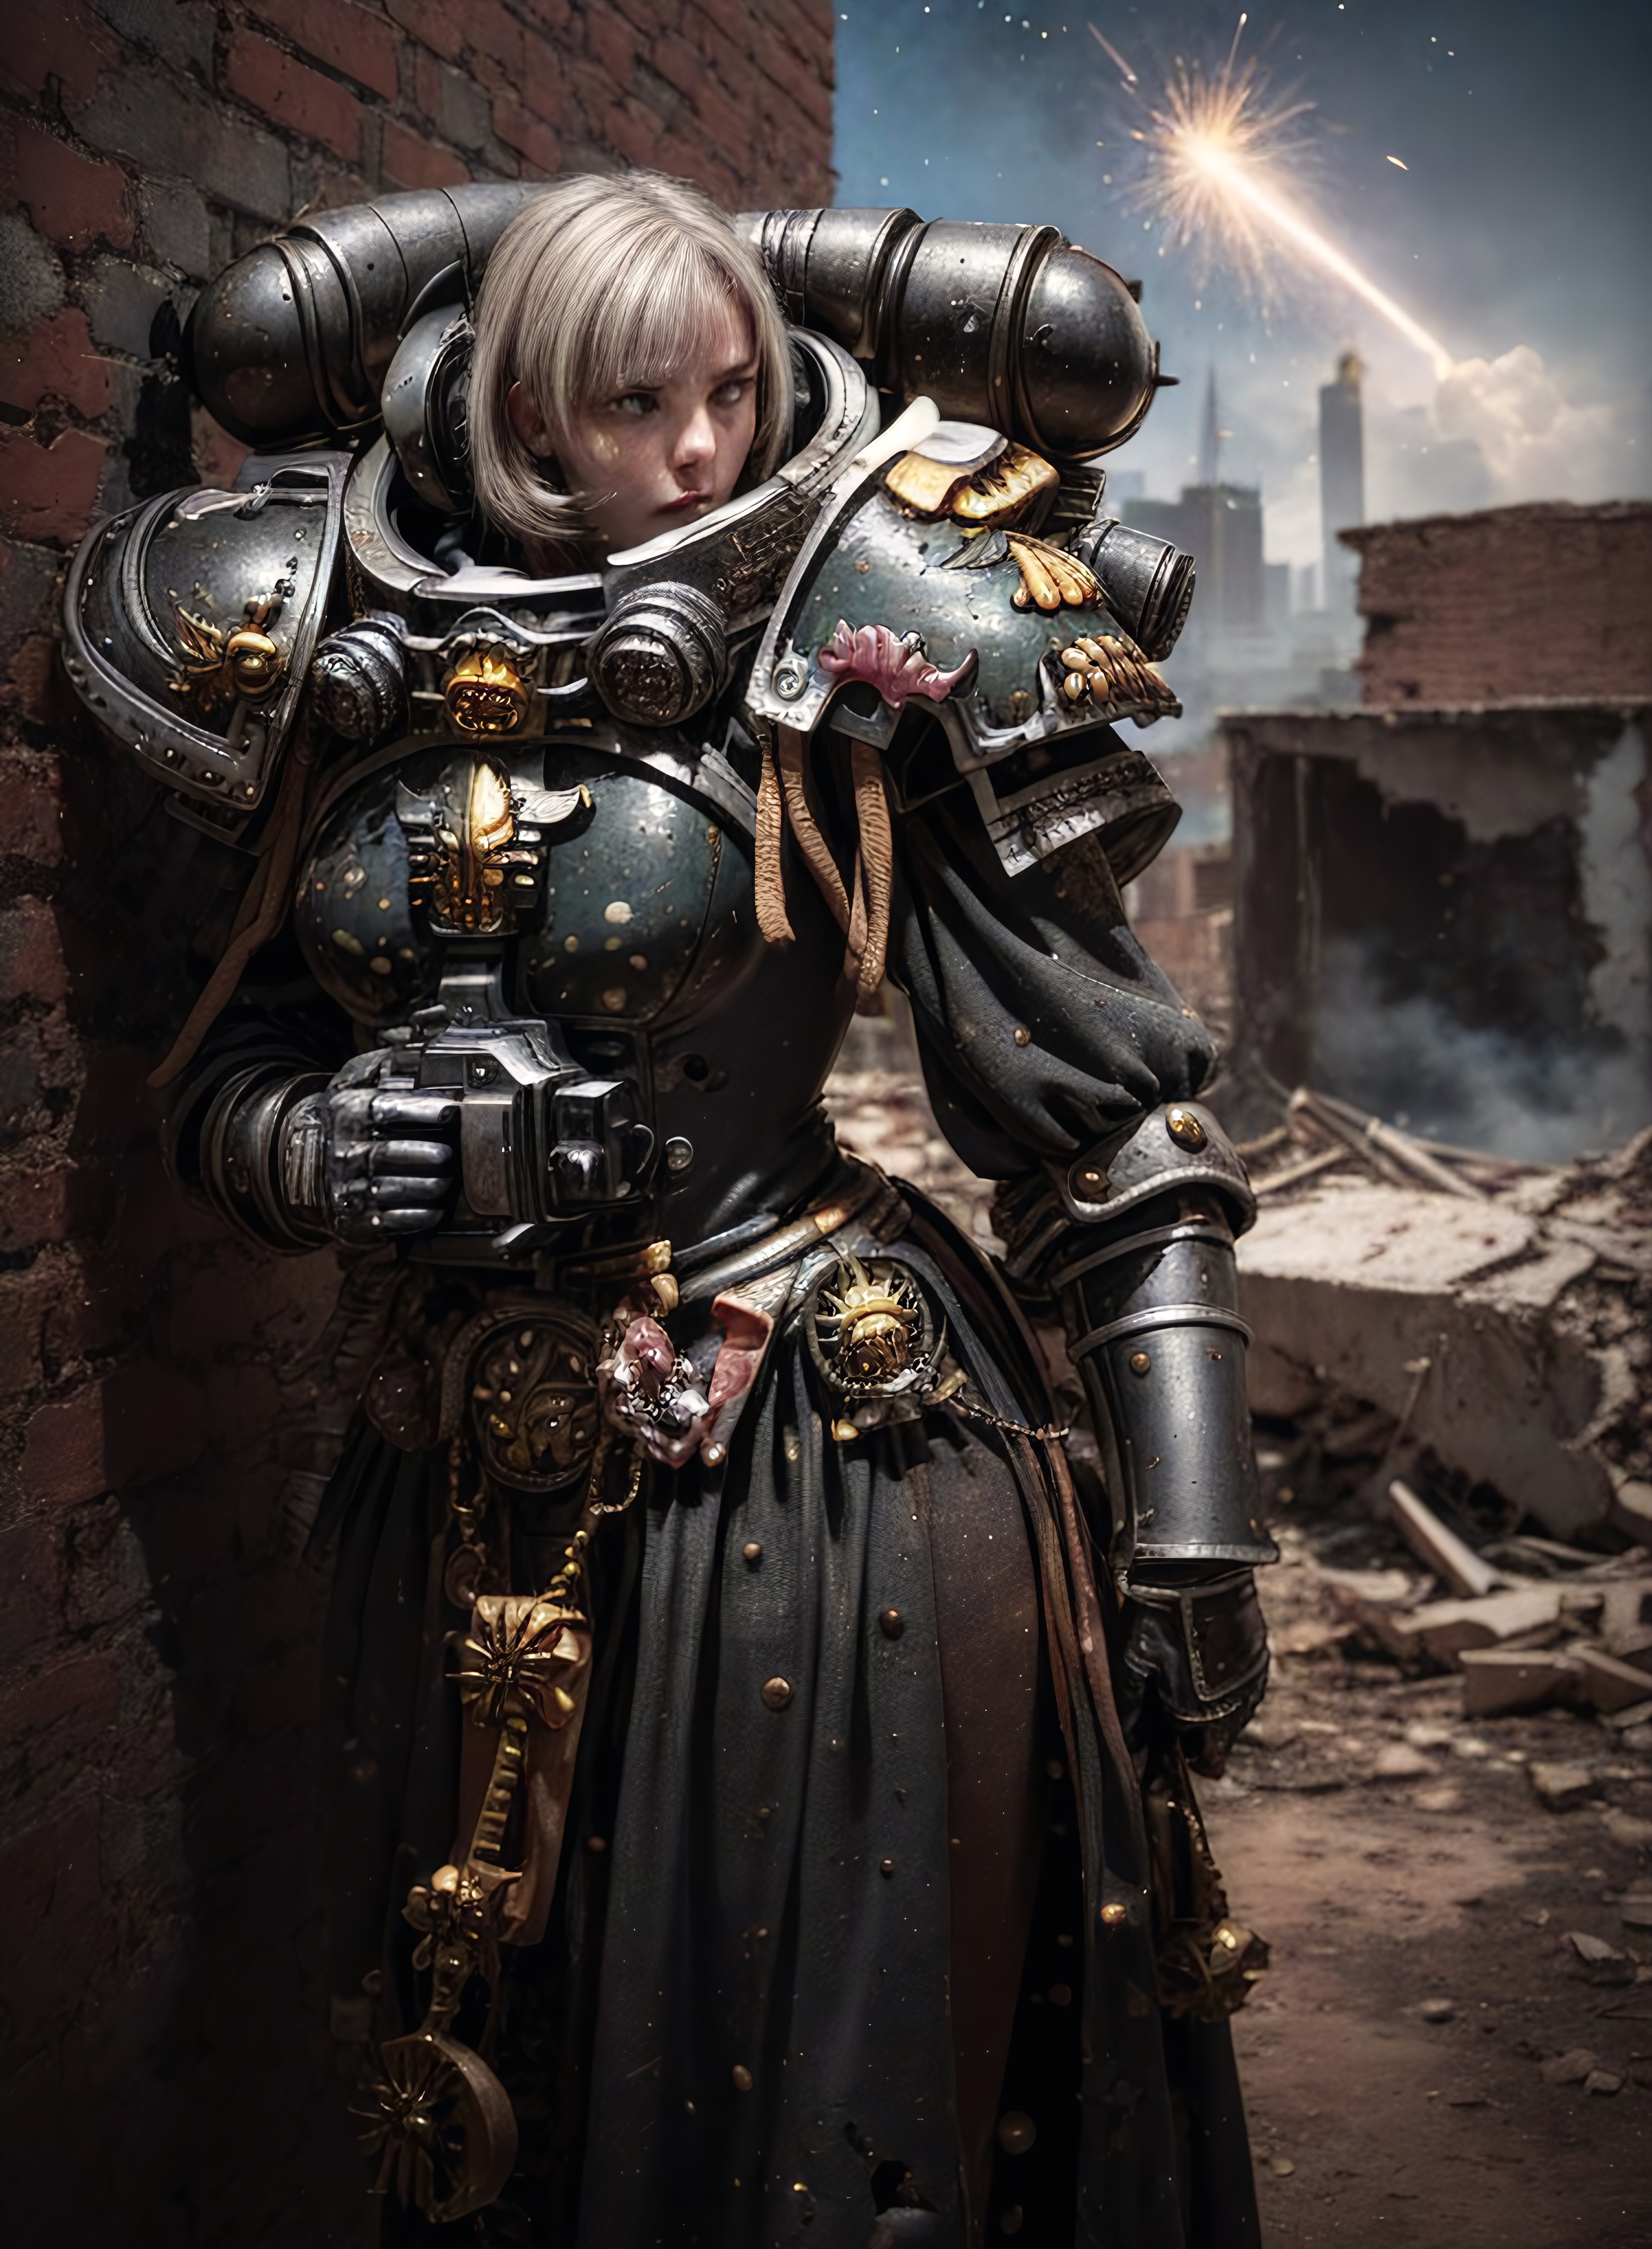 Warhammer 40K Sisters of Battle image by asdgwg